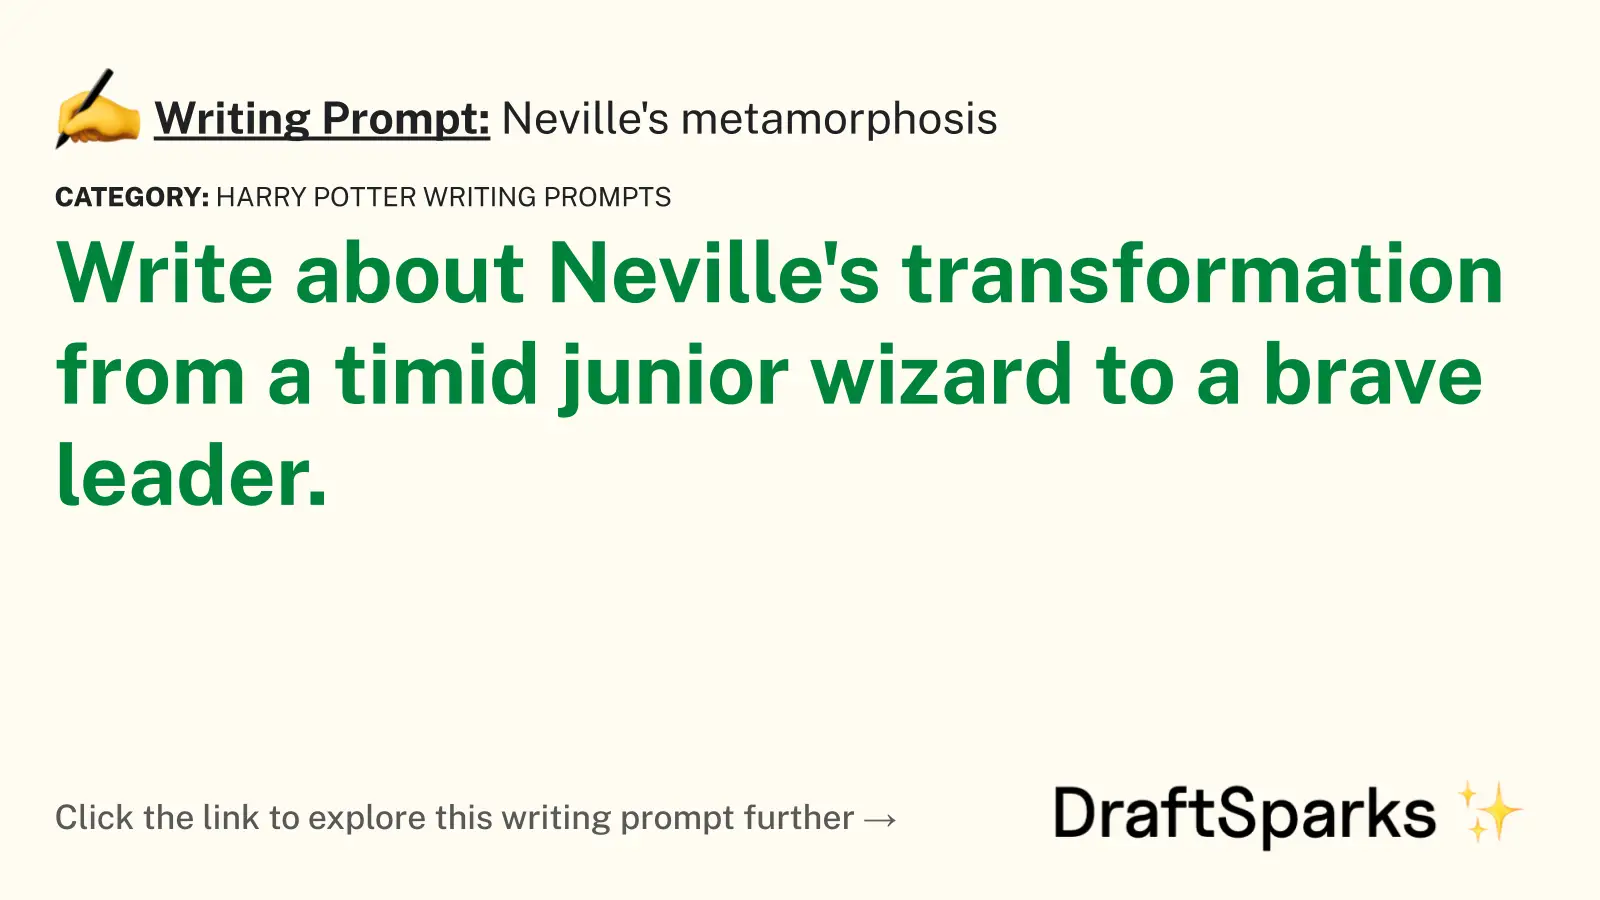 Neville’s metamorphosis